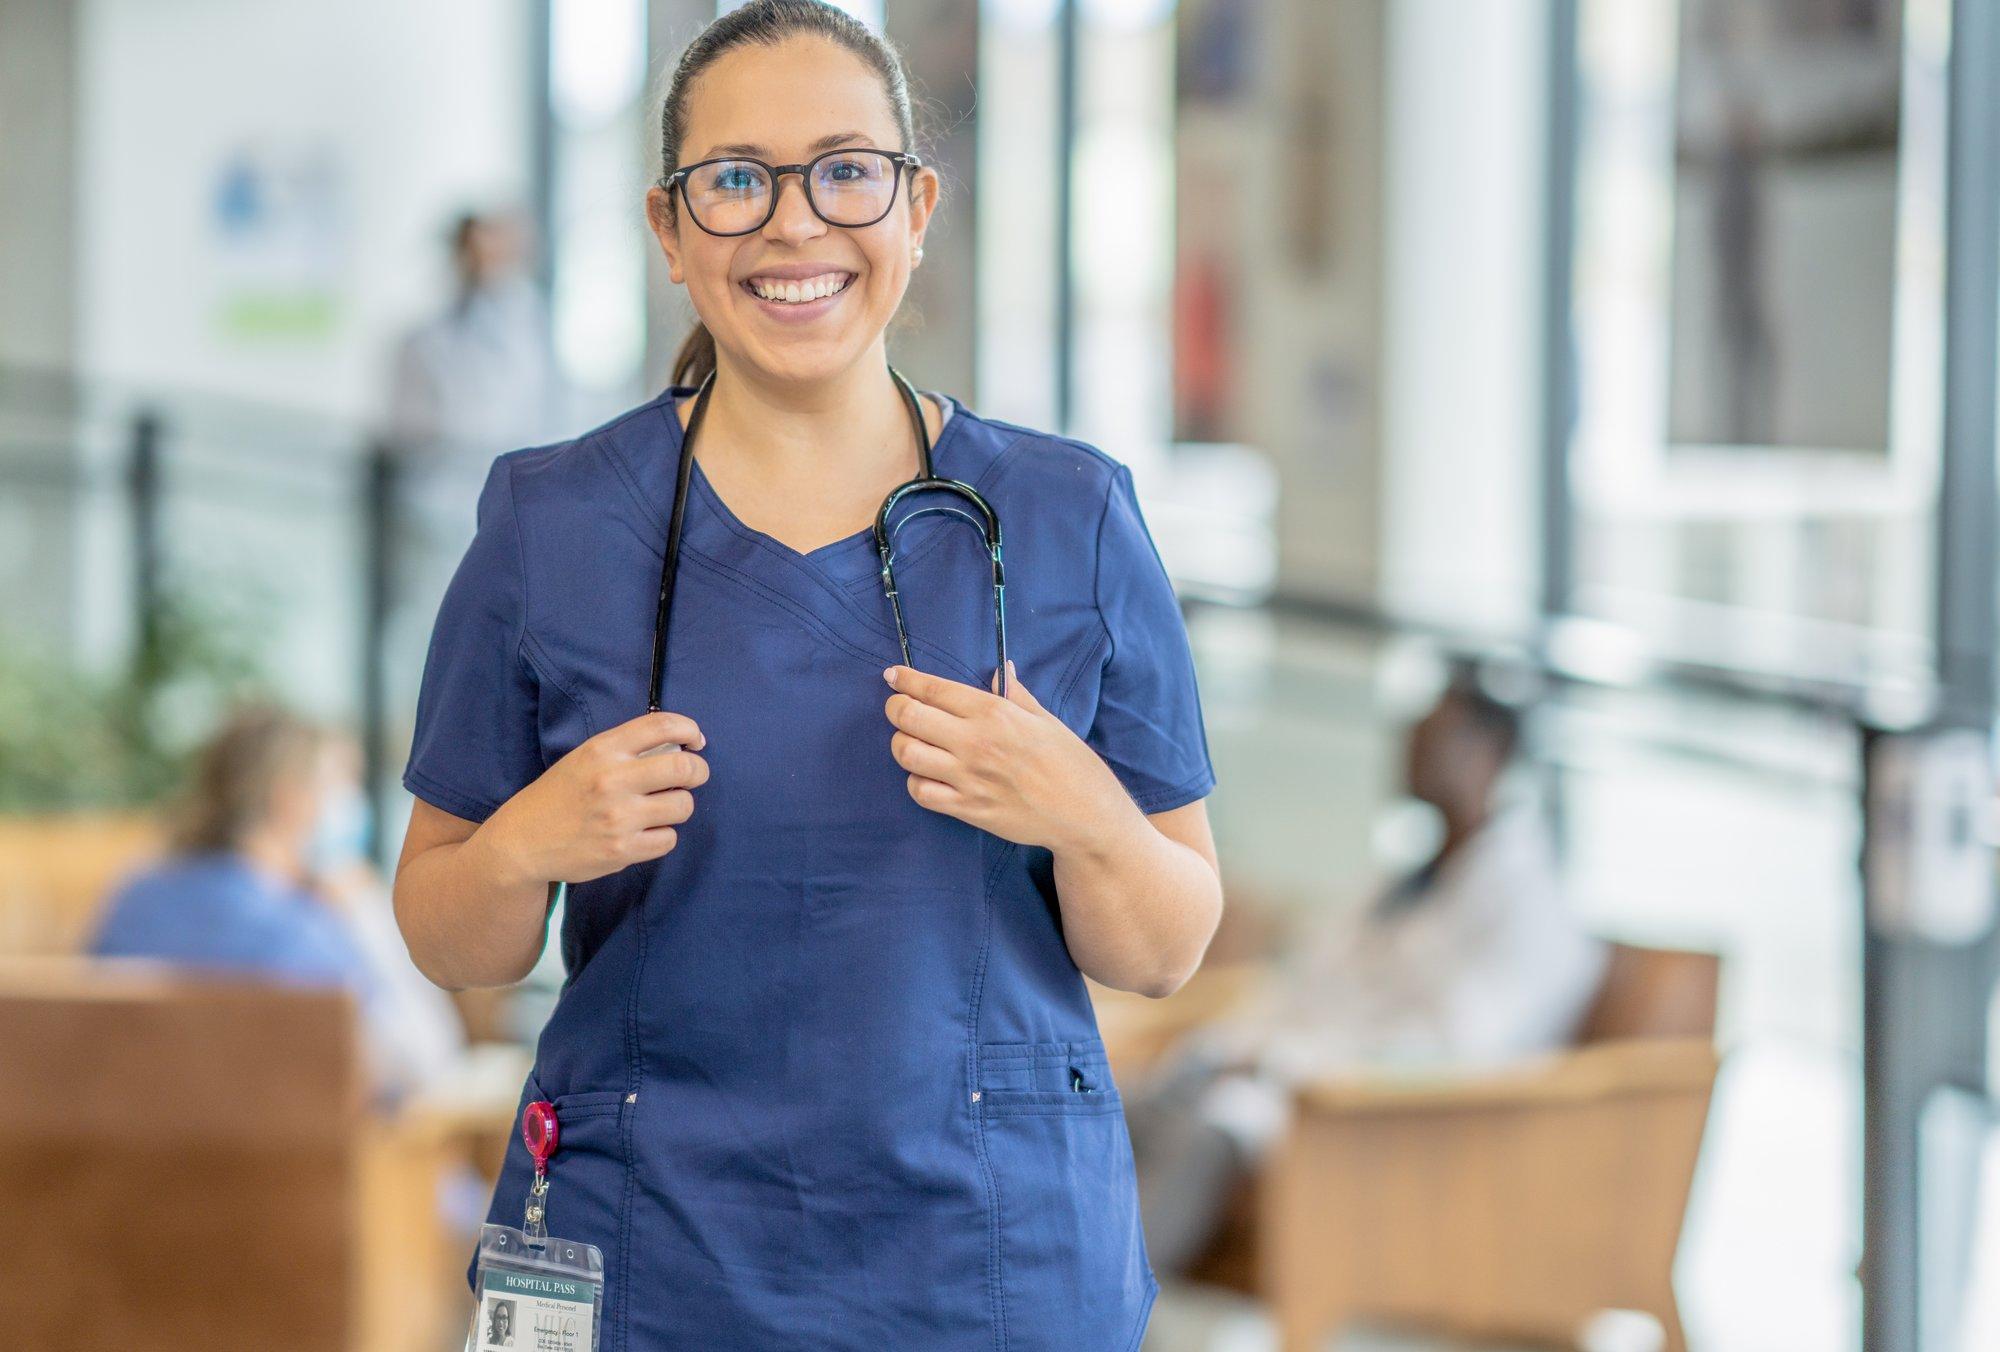 Nurse Practitioner Named Best Job That Helps People